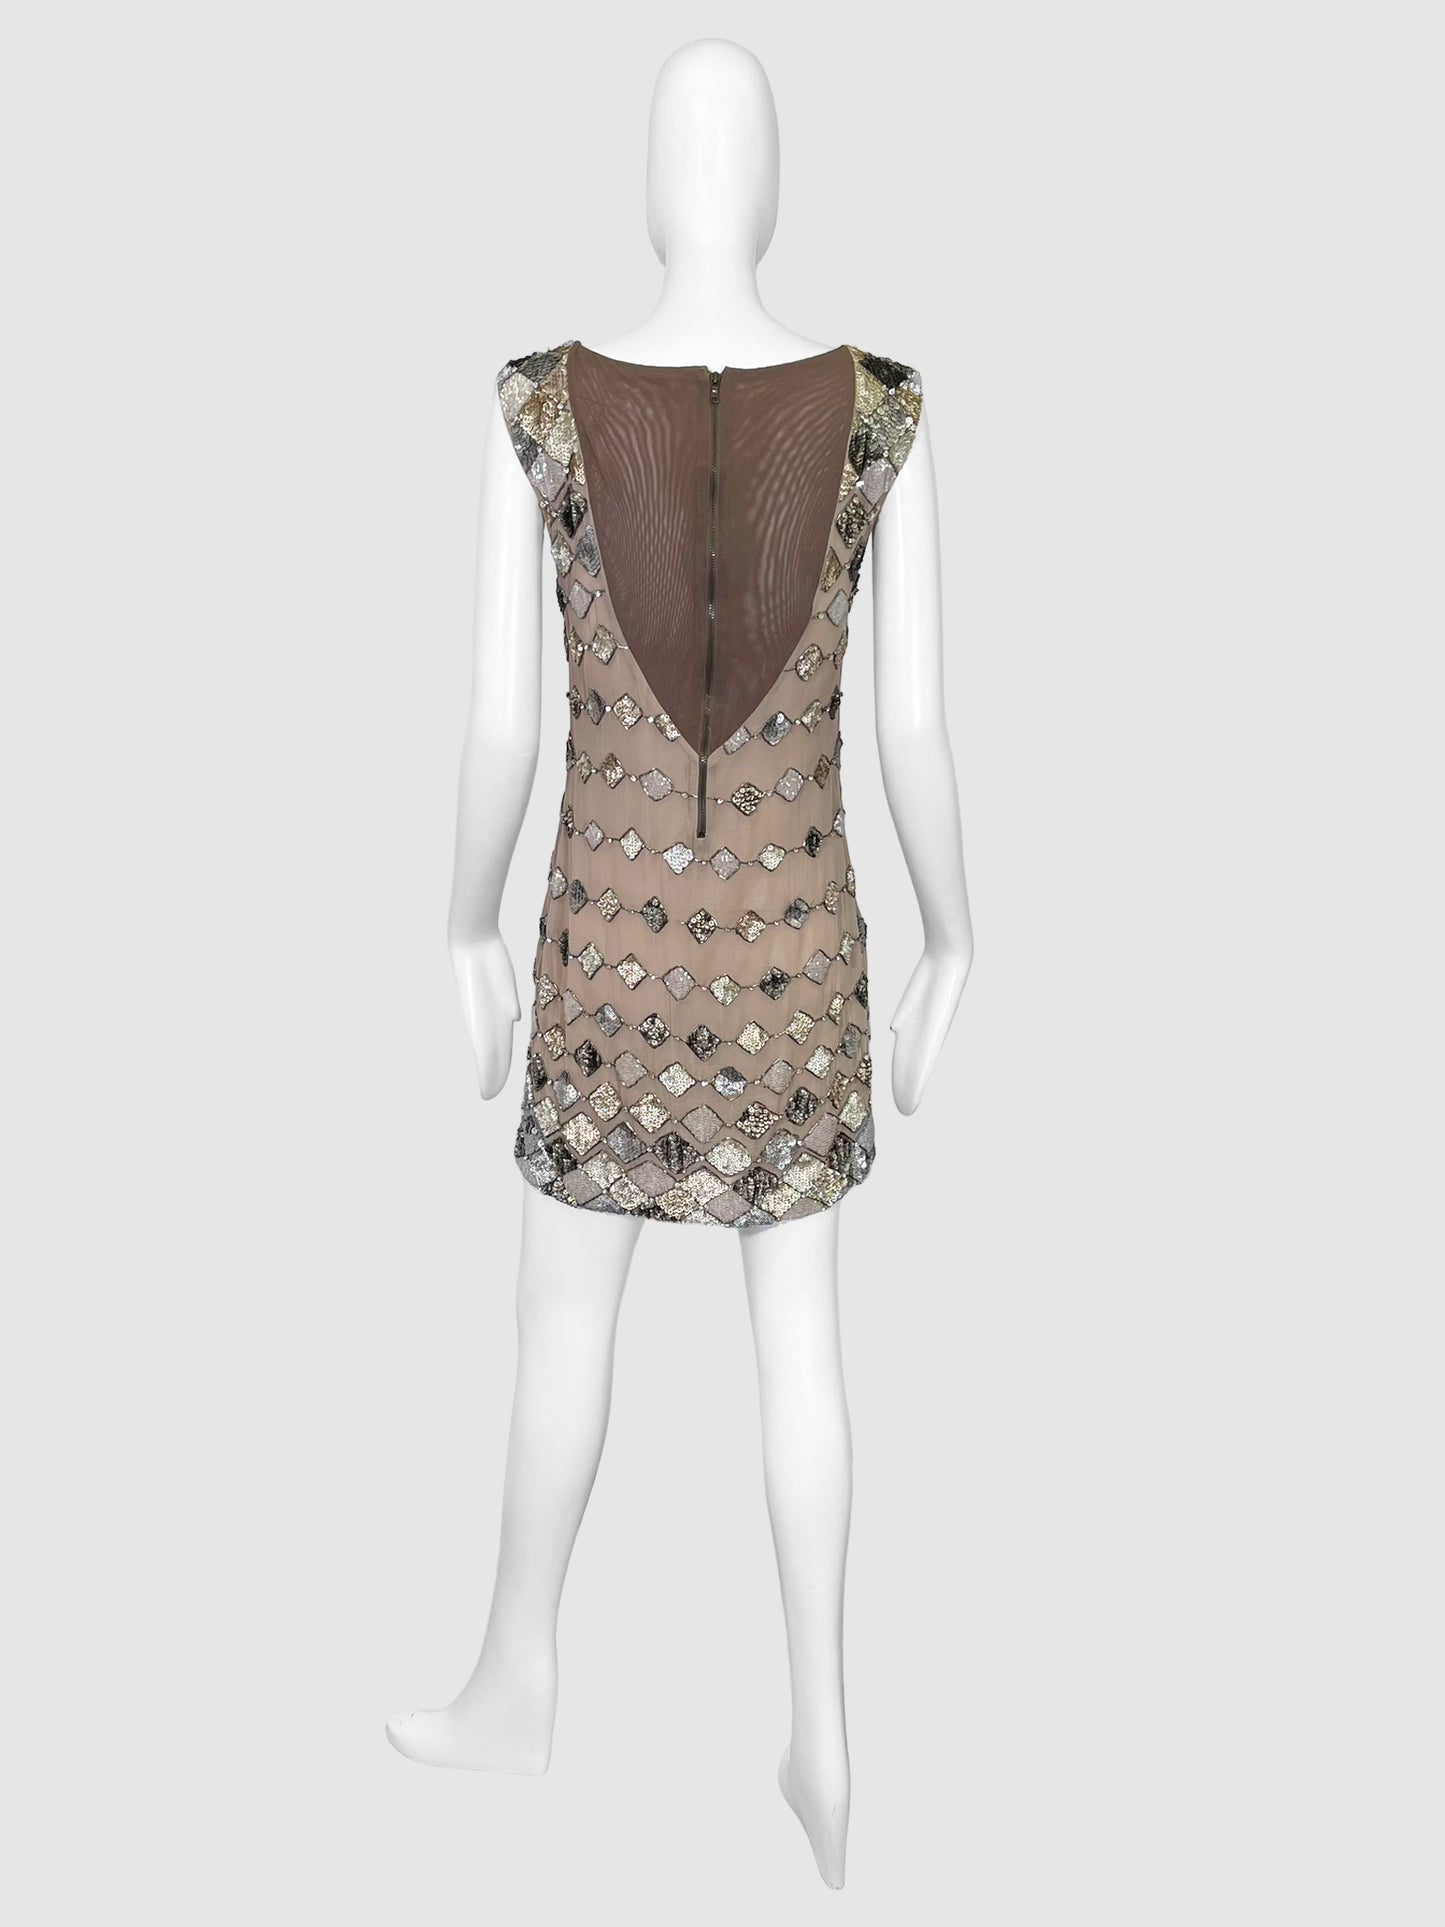 Alice + Olivia Silk Sequinned Diamond Print Dress - Size 4